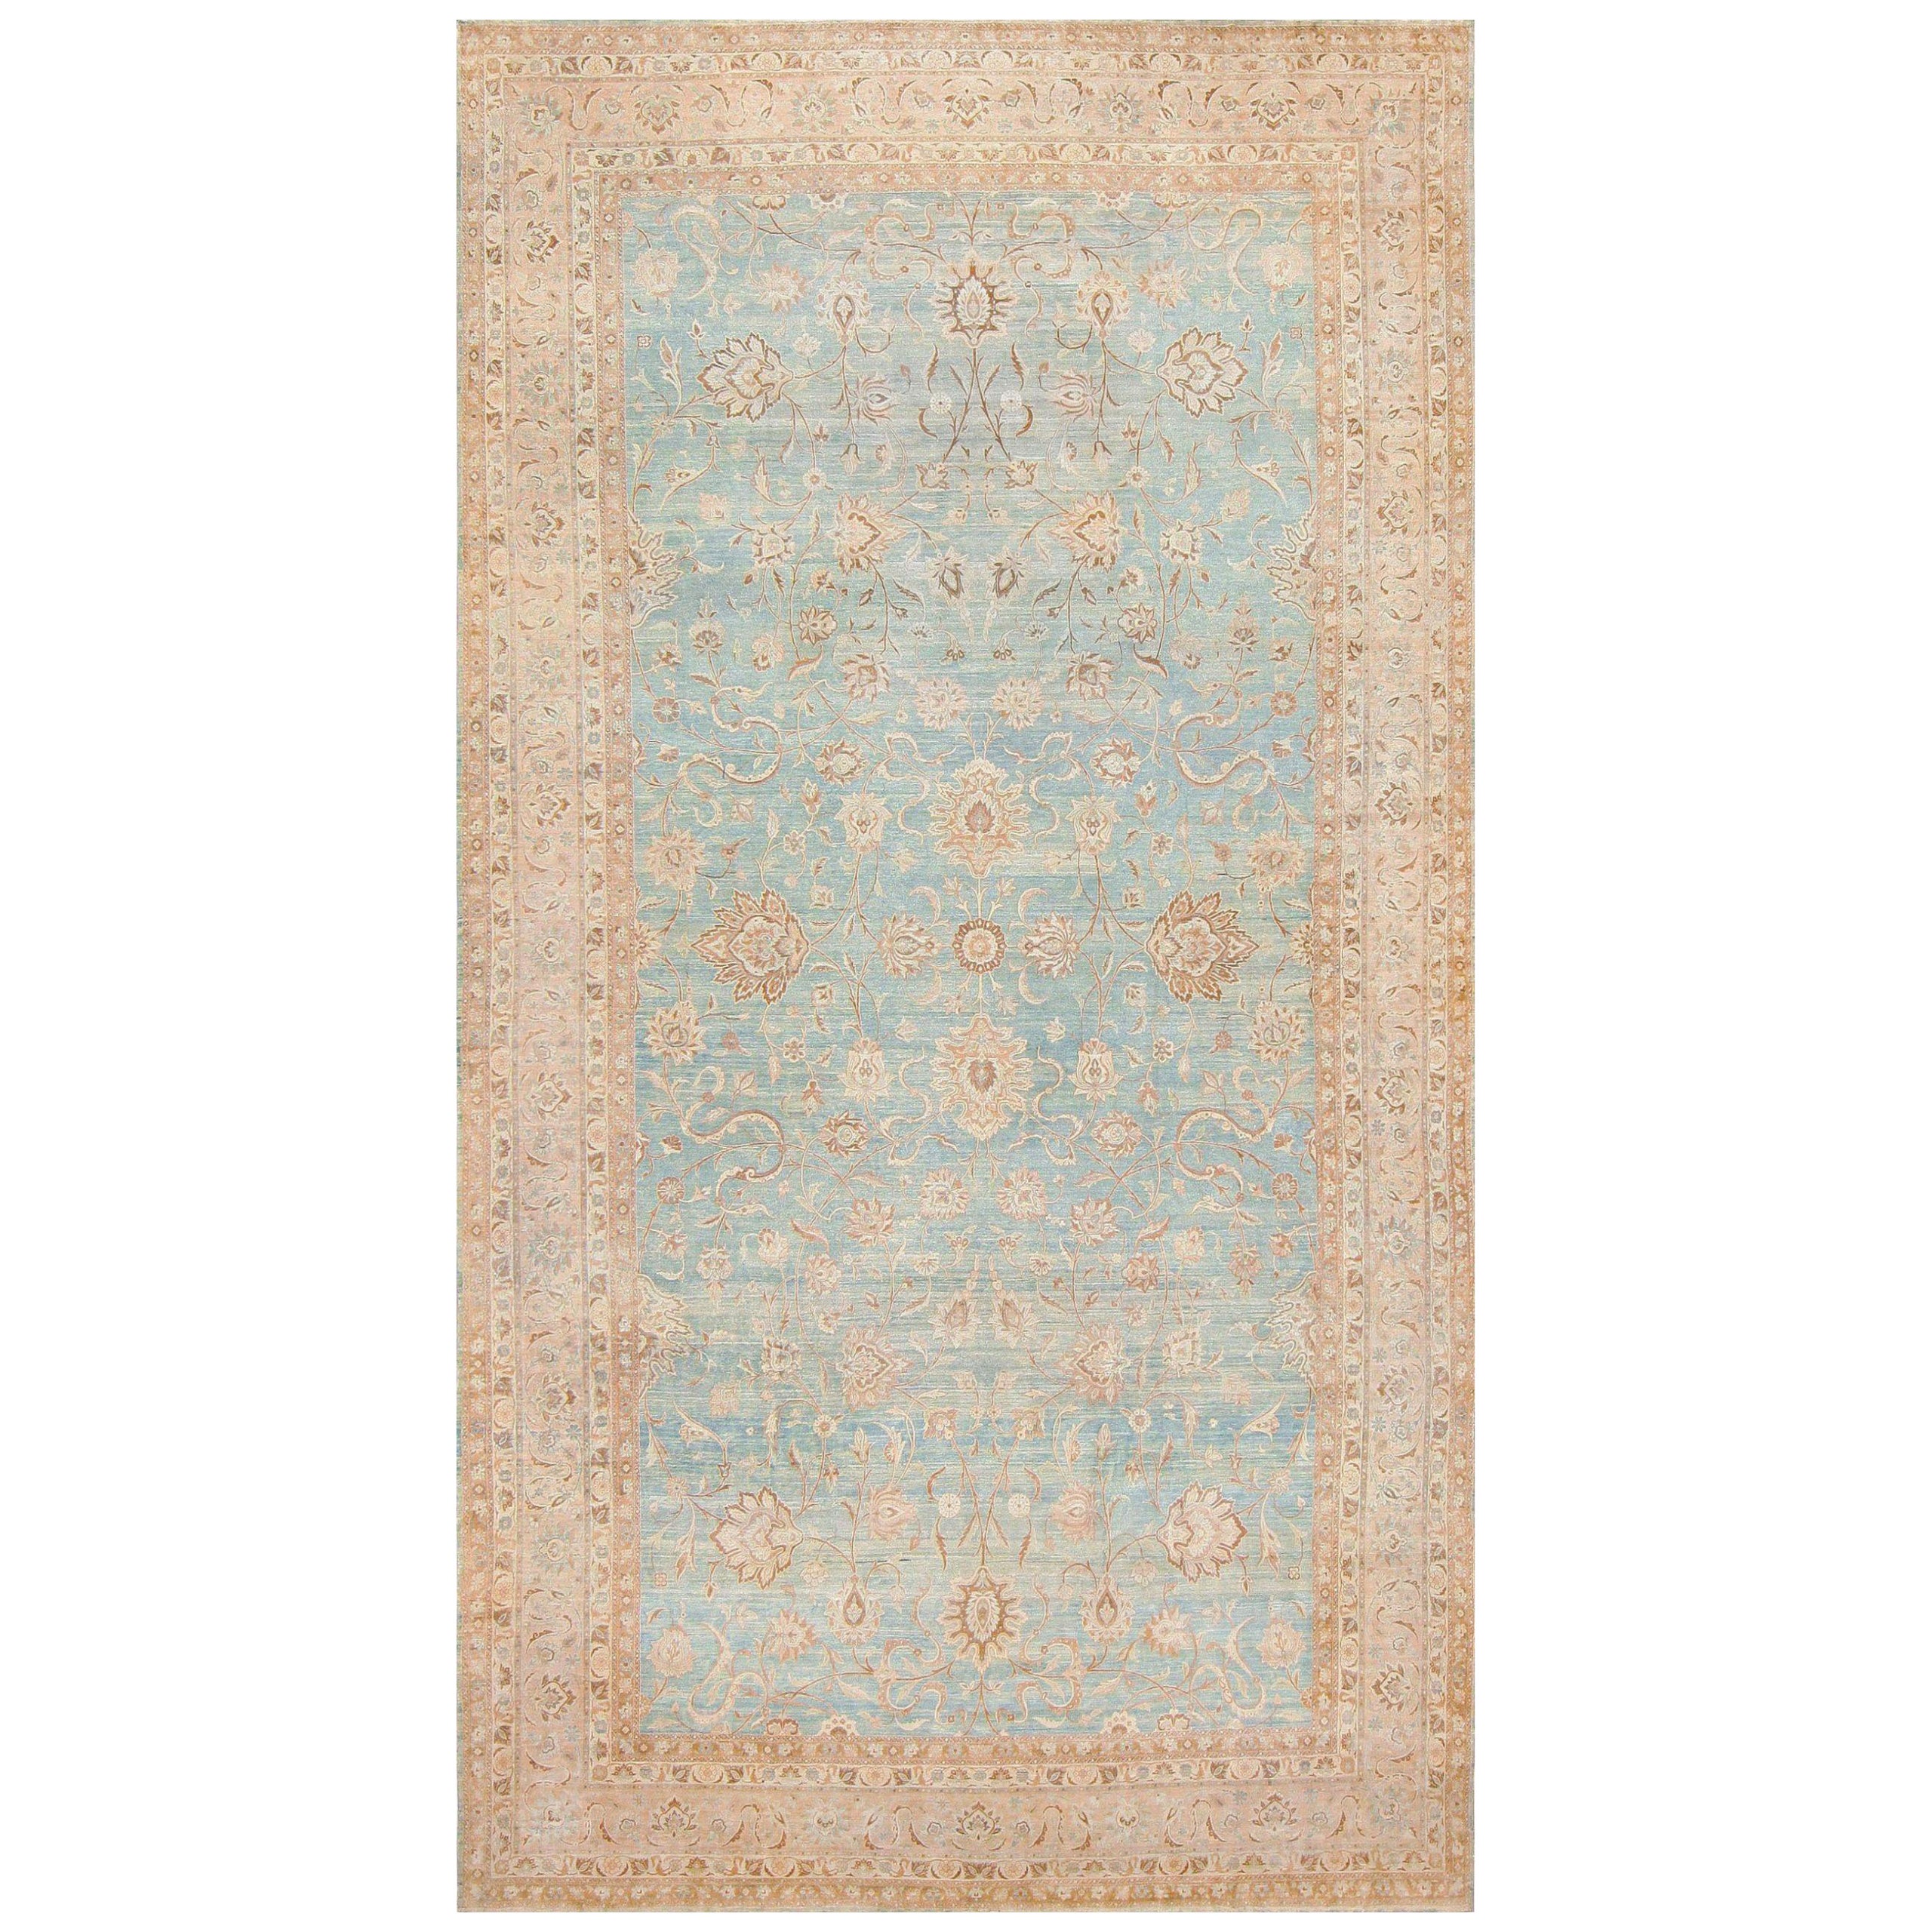 Antique Sky Blue Persian Kerman Carpet. 10 ft 9 in x 20 ft